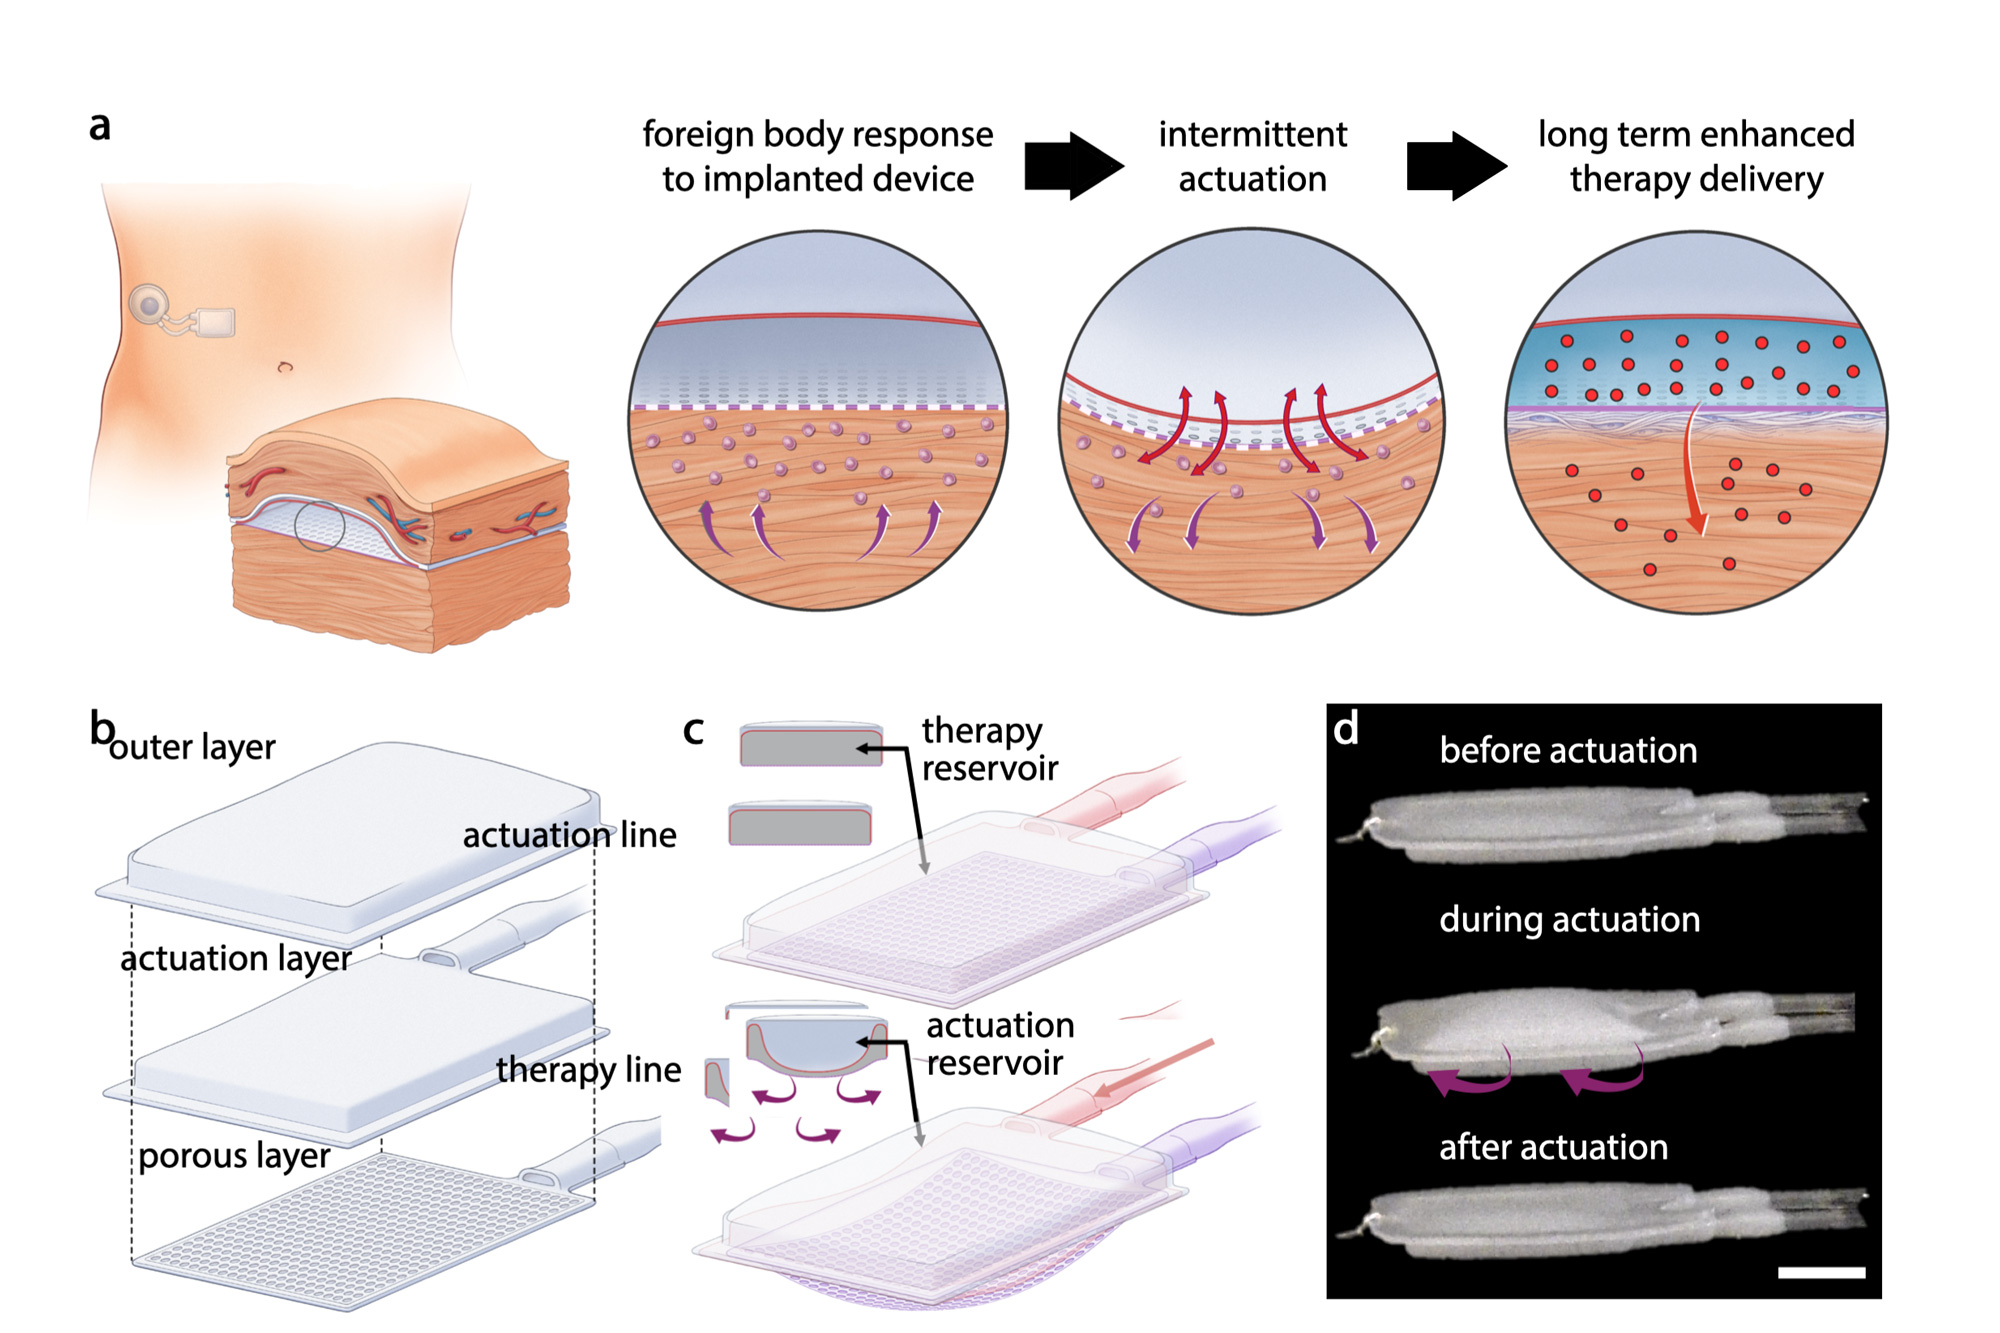 Design prevents buildup of scar tissue around medical implants, MIT News